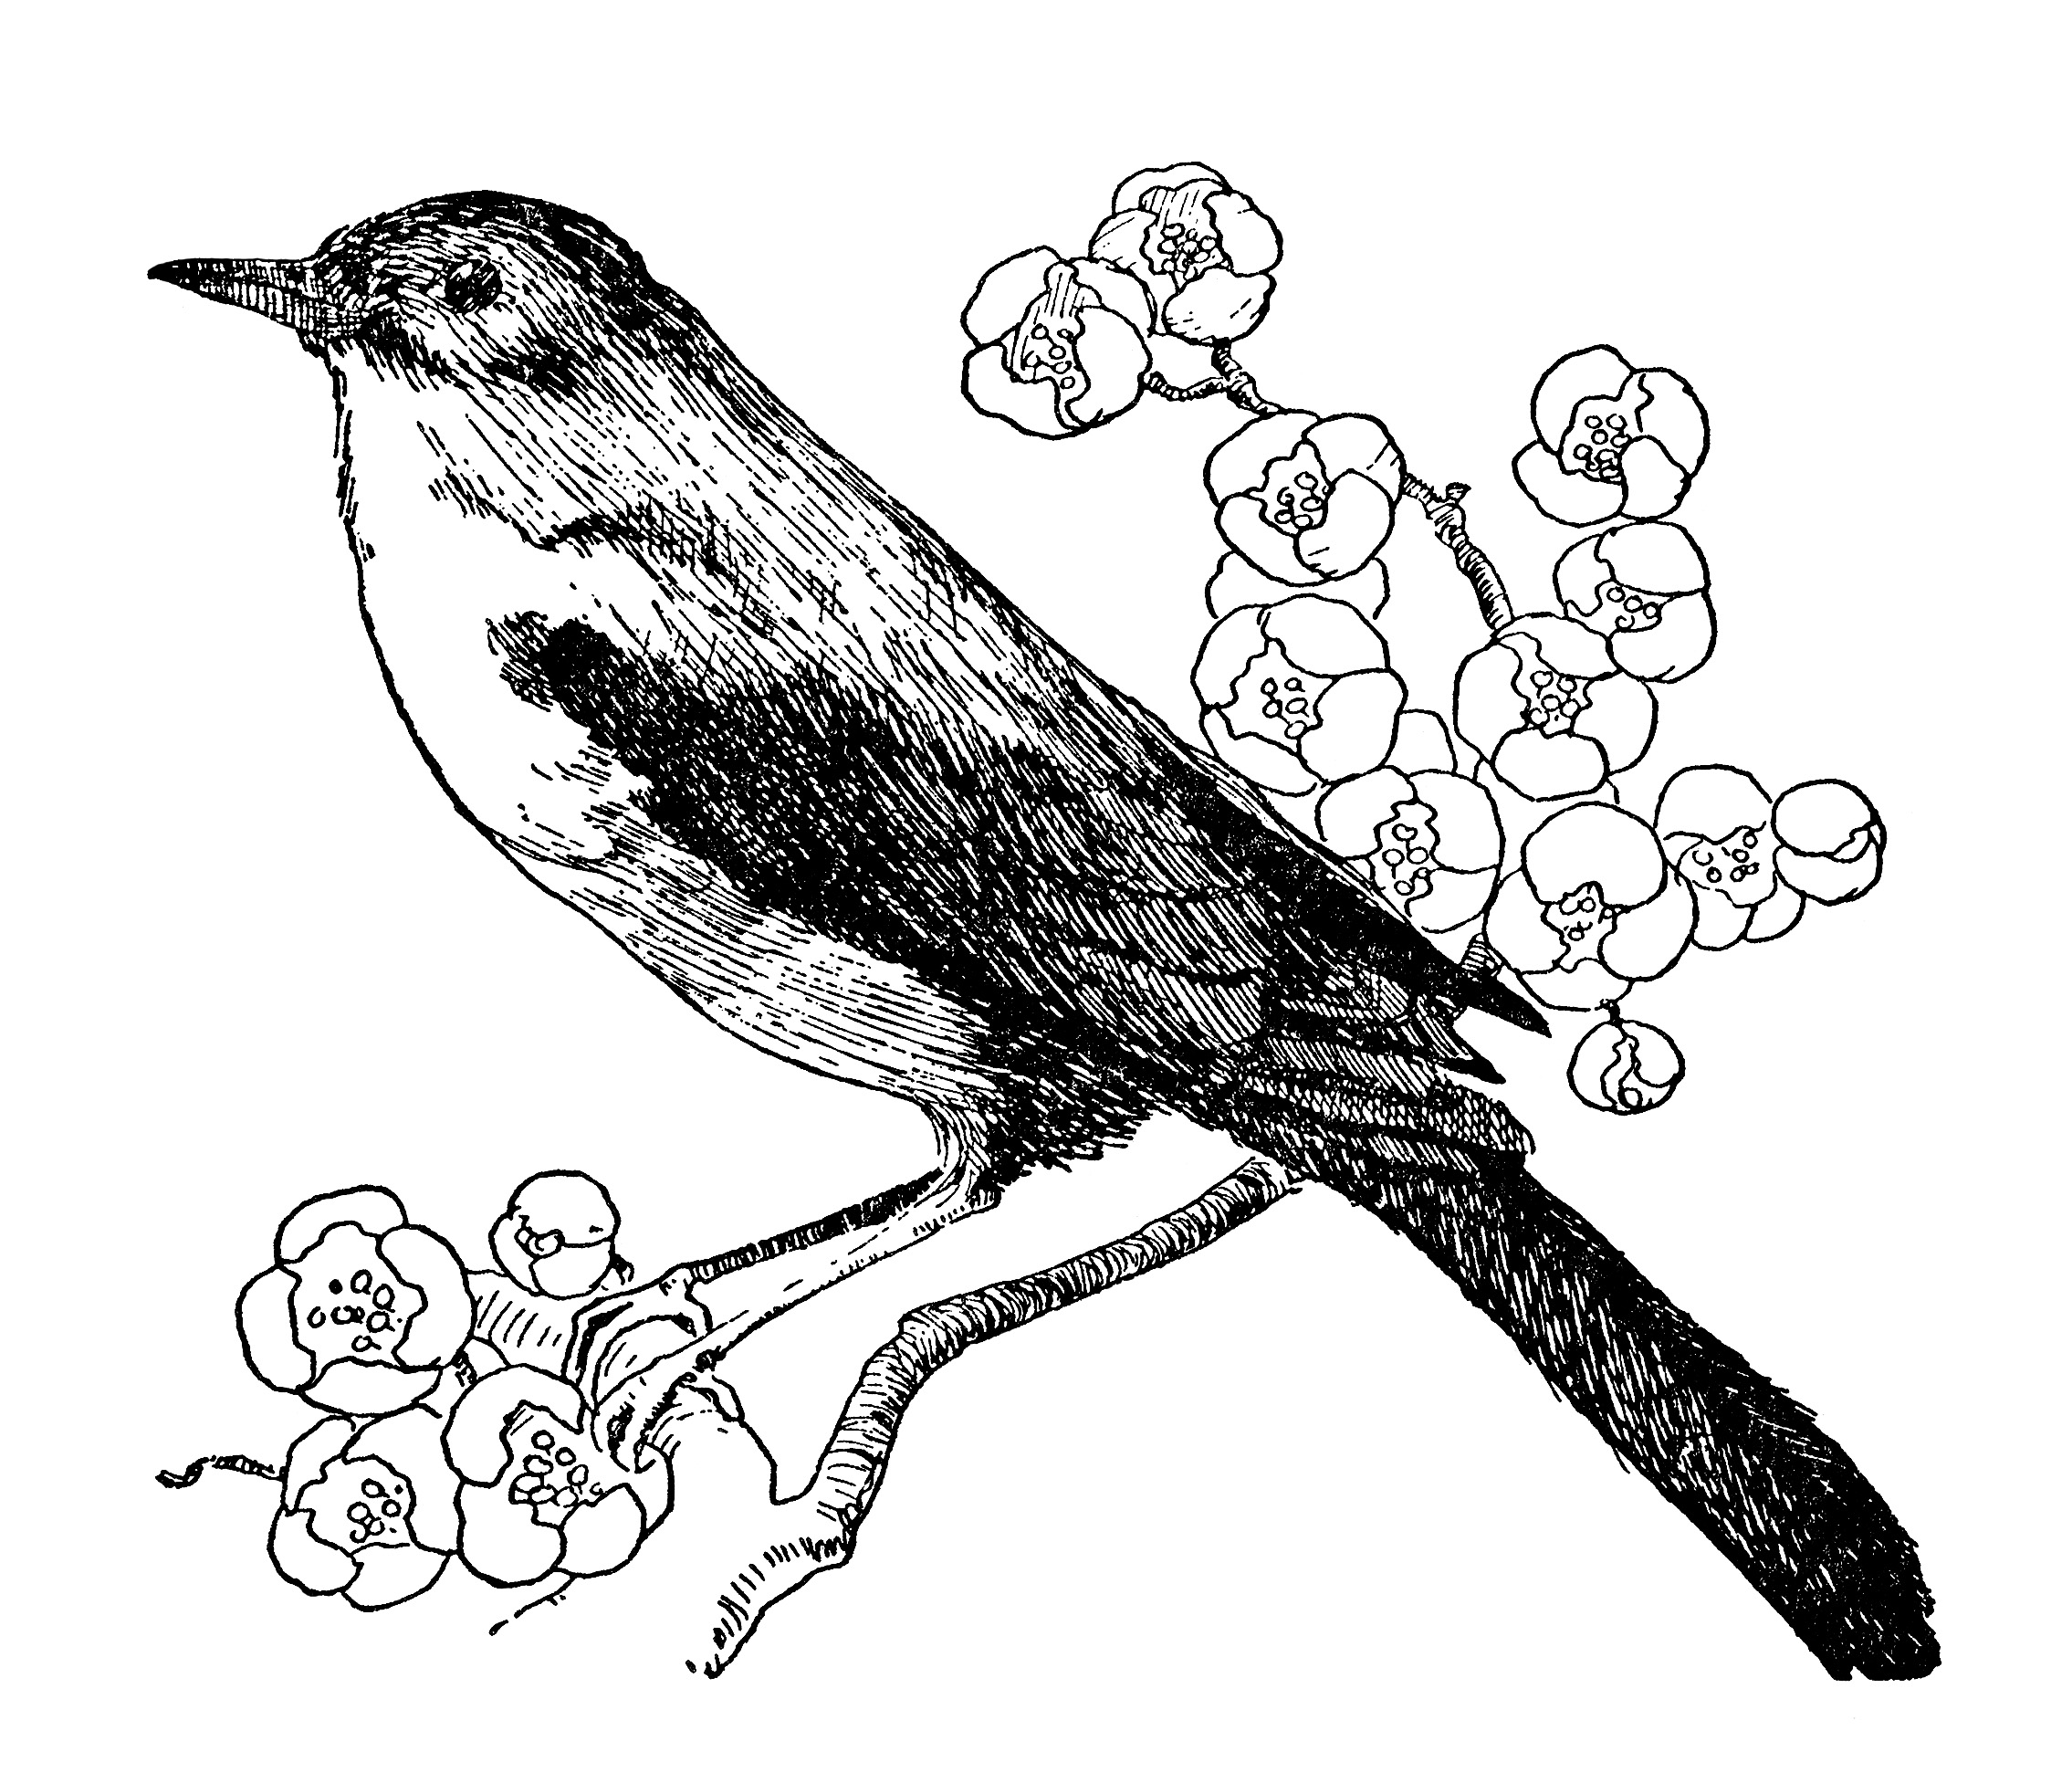 Nightingale Bird Clip Art Illustration - The Old Design Shop - Clip Art ...